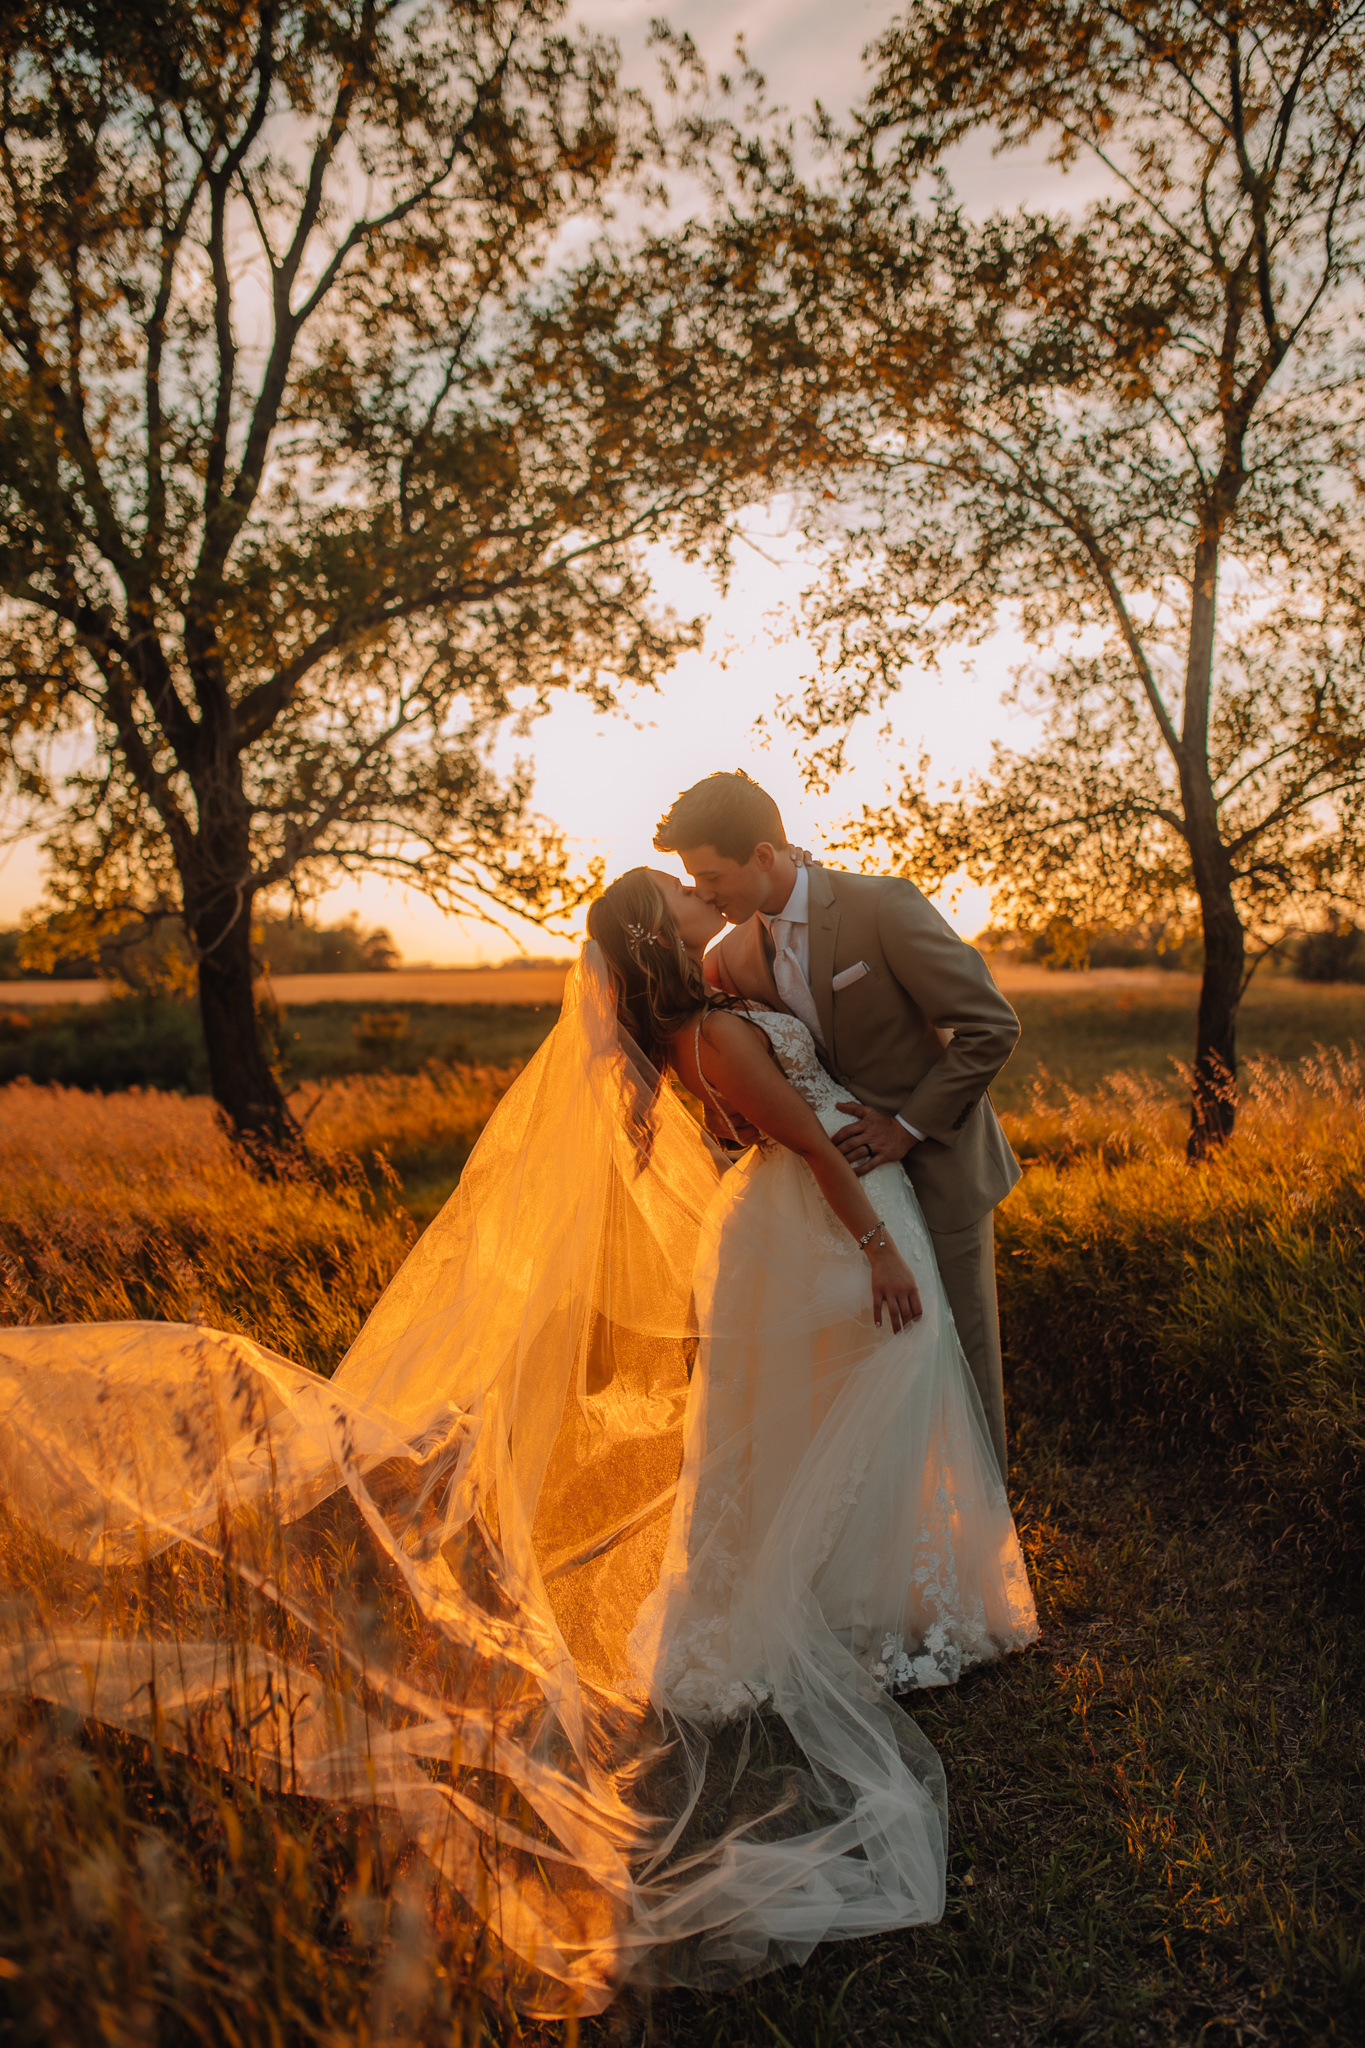 Fargo Bride and Groom Sunset Wedding Photos at Lone oak Farm in North Dakota